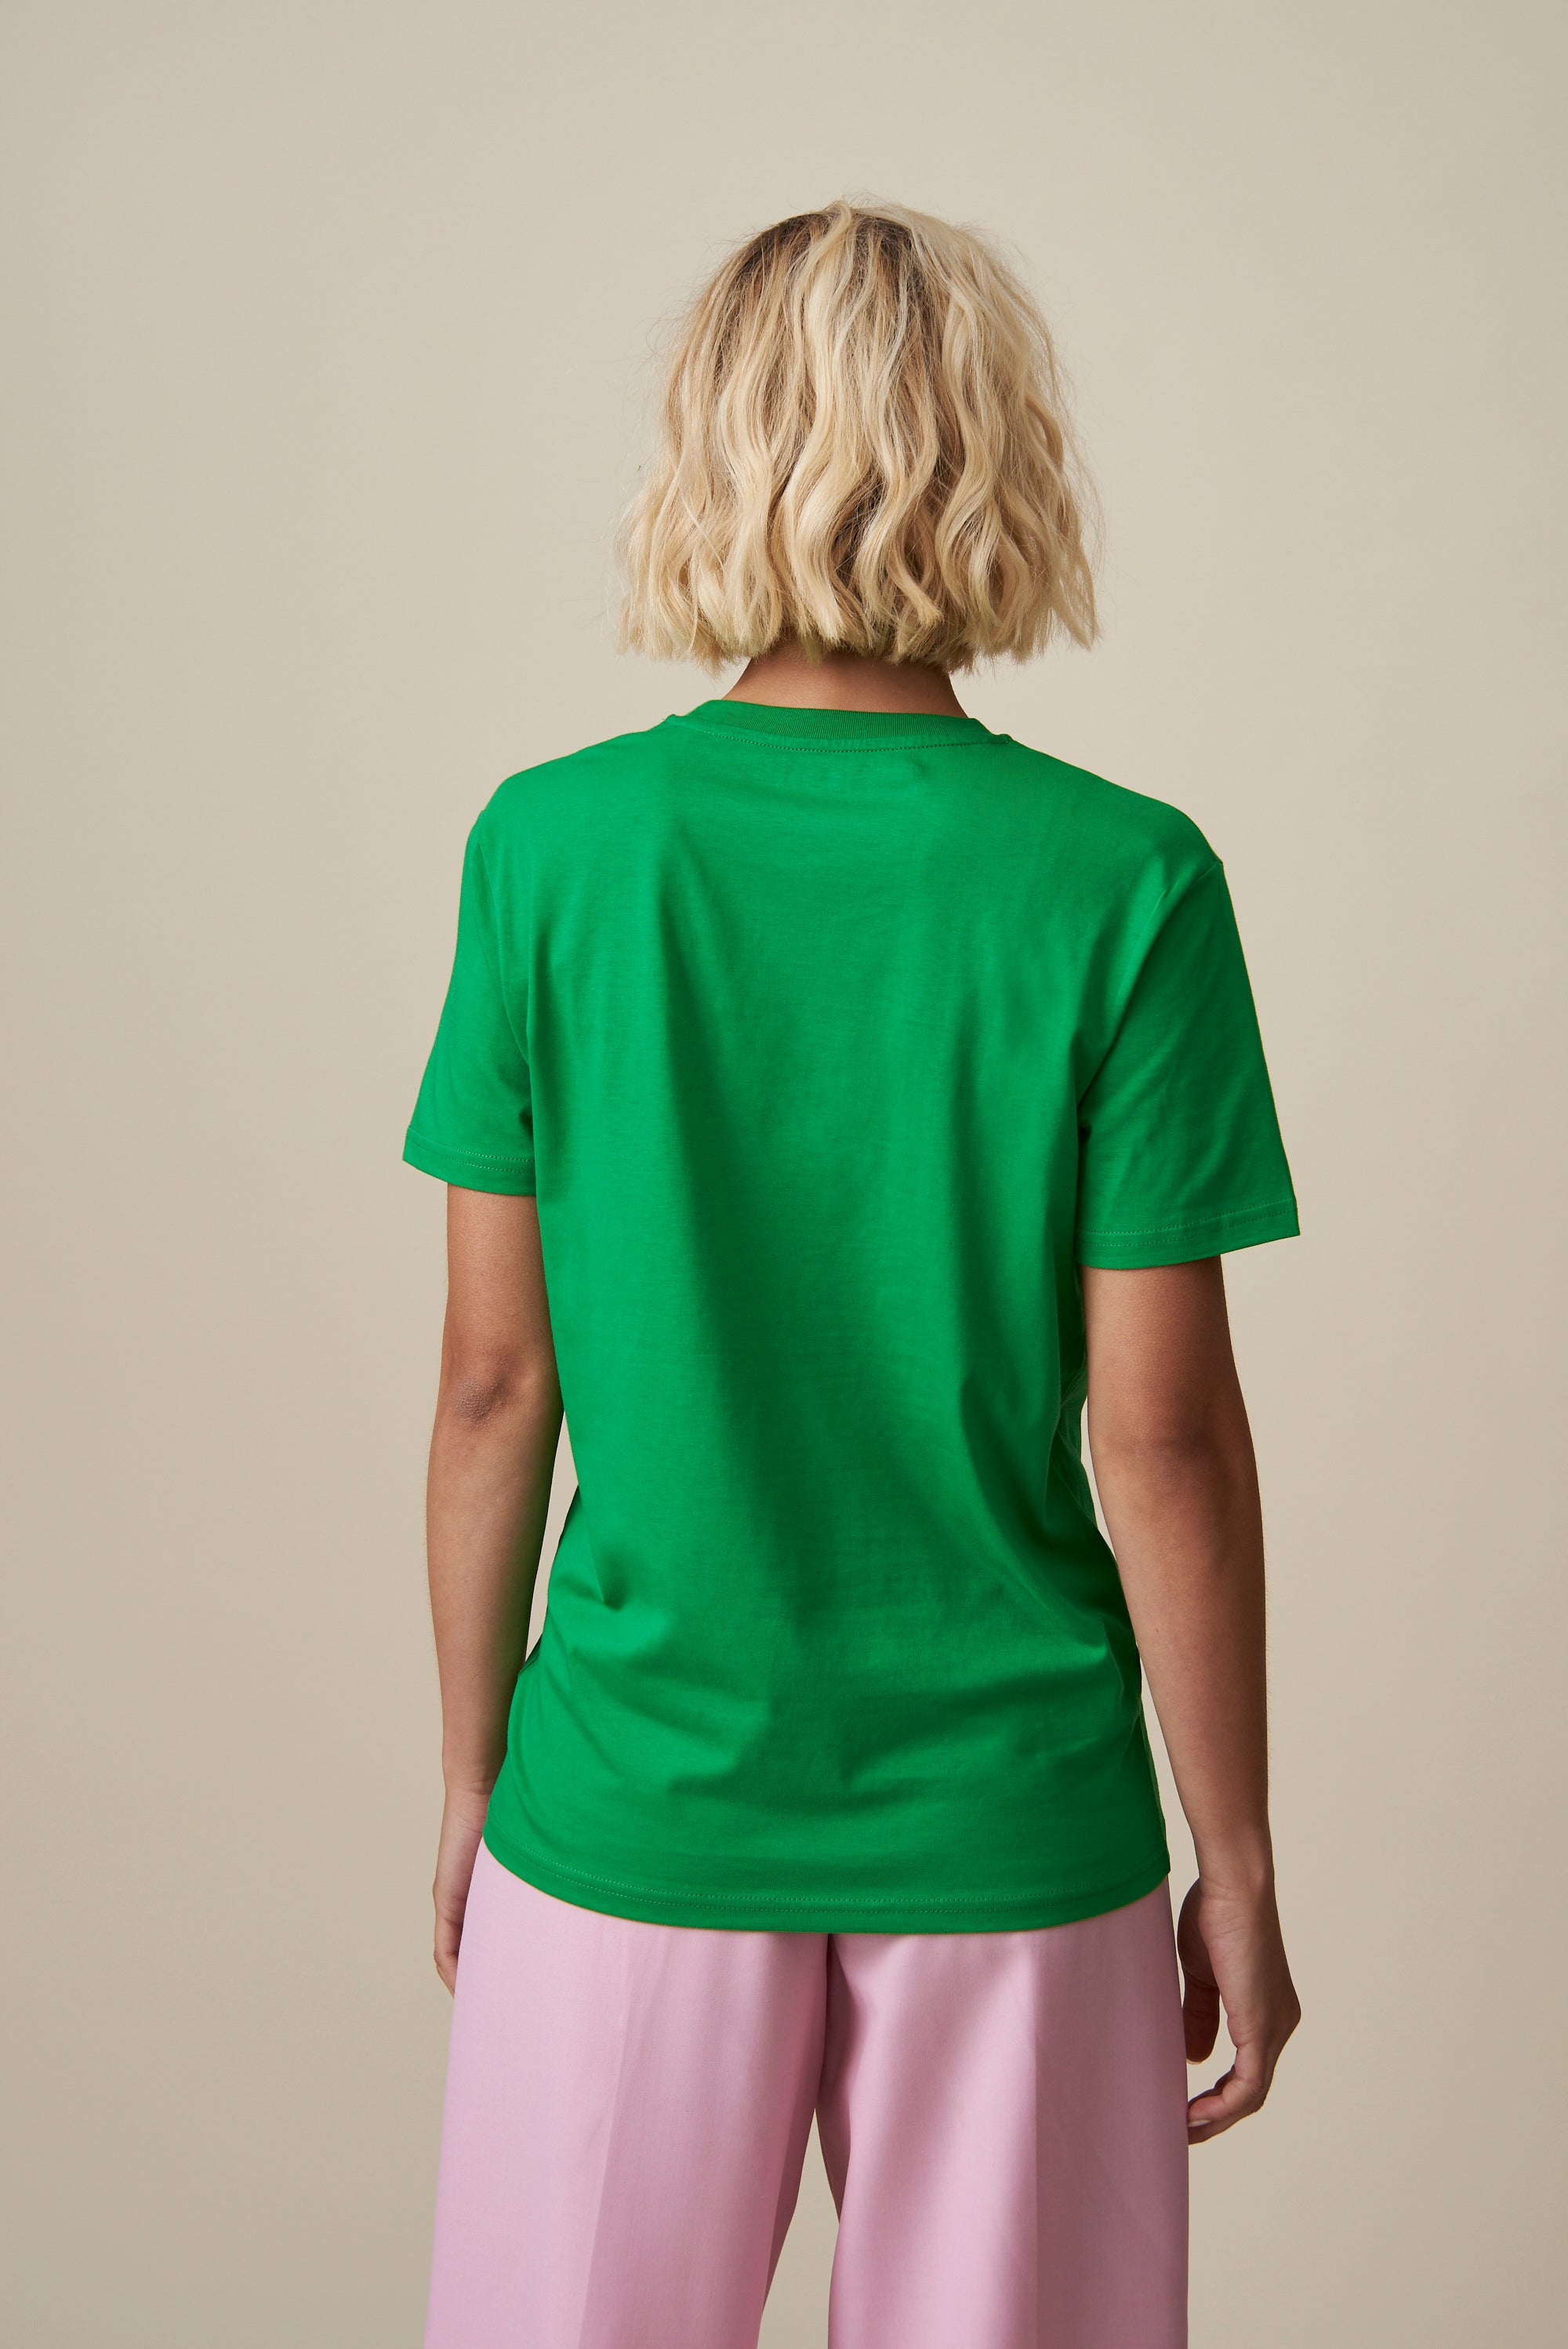 Bisous T-Shirt - Green / Neon Pink Rhinestones